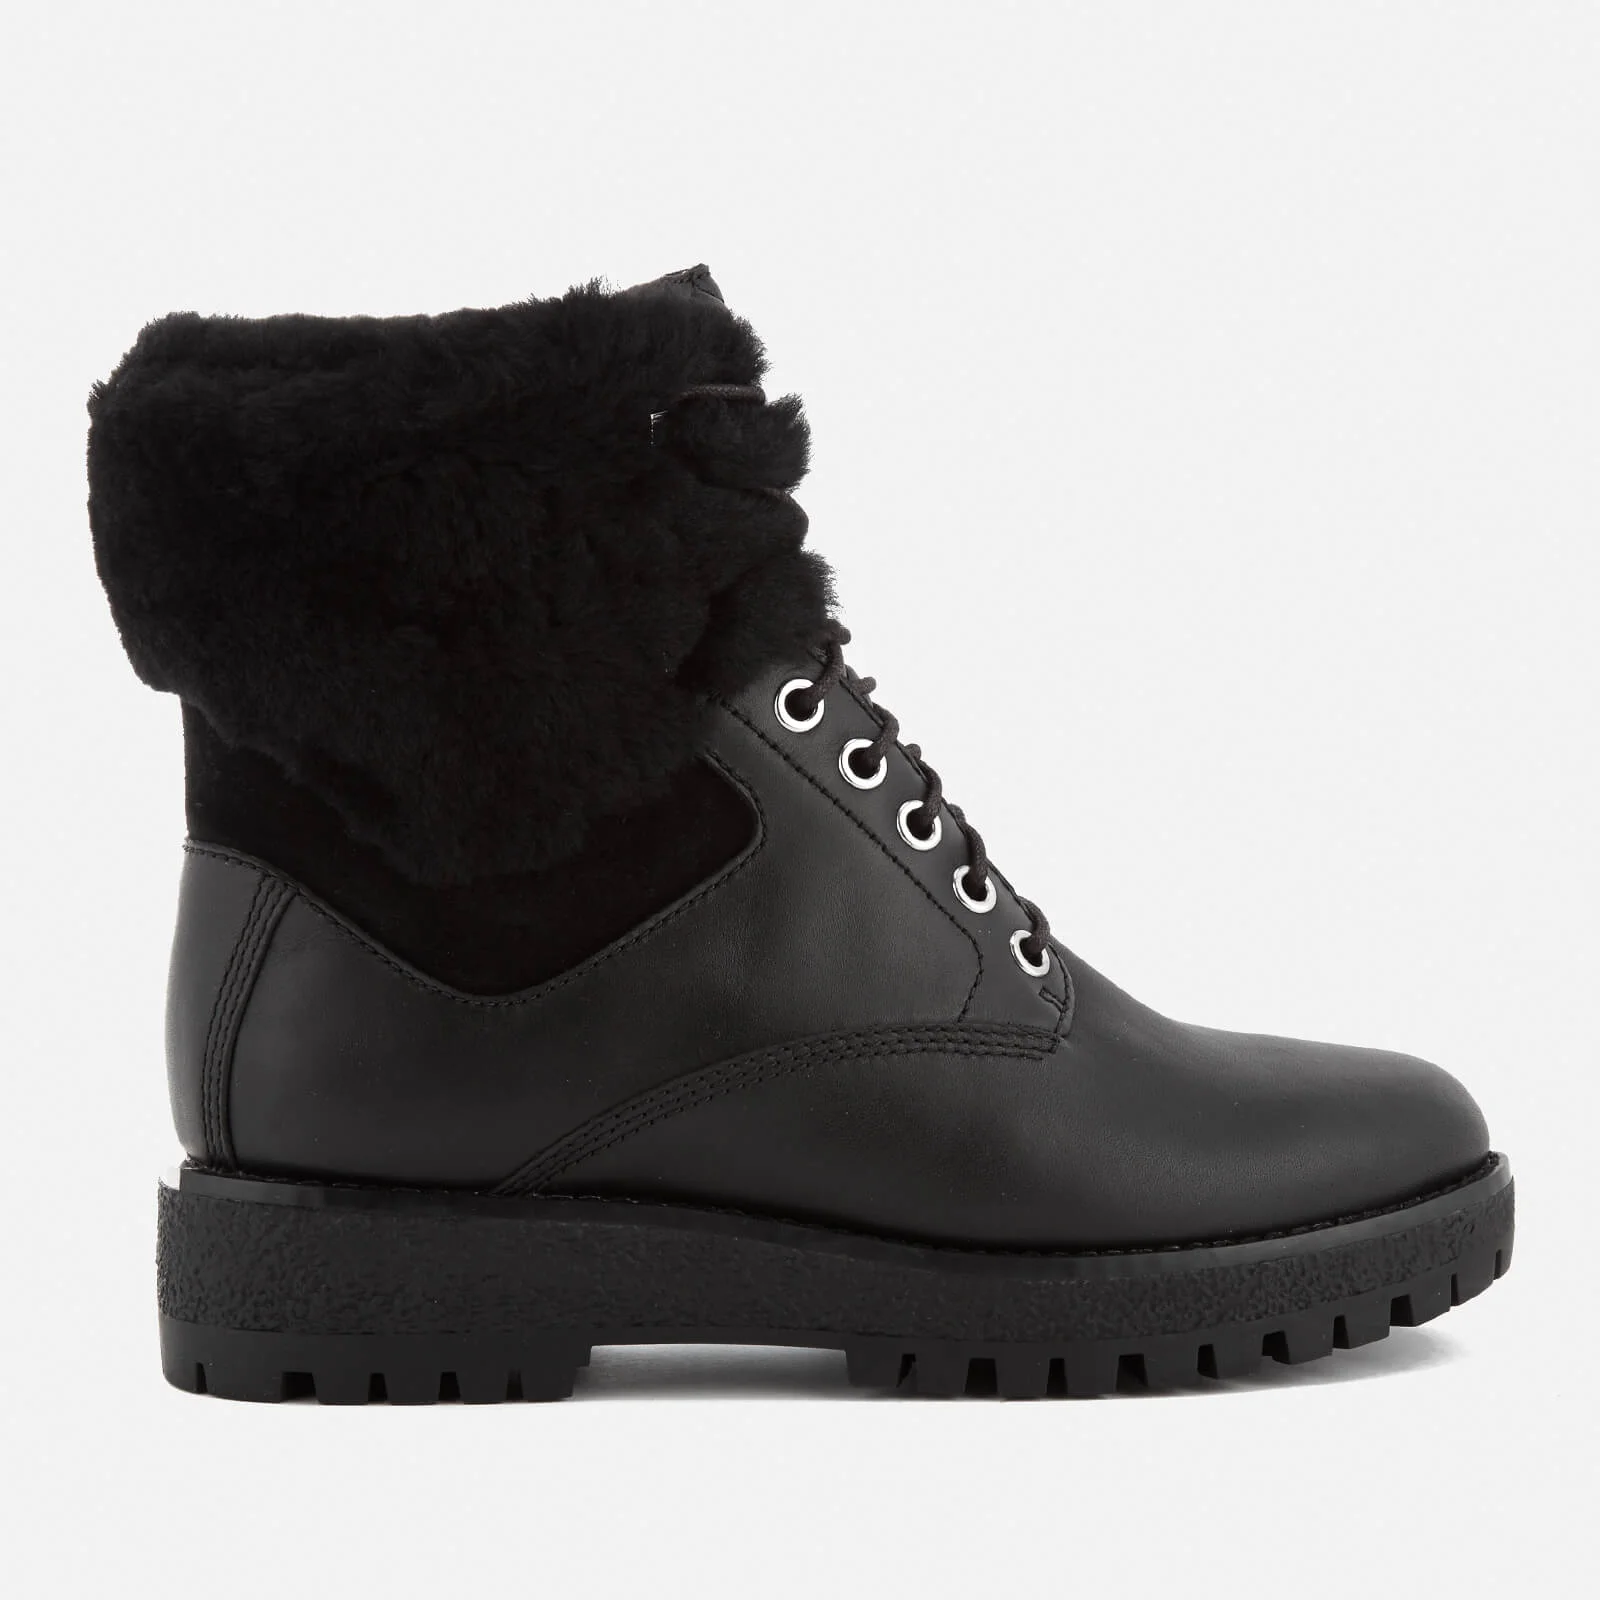 MICHAEL MICHAEL KORS Women's Teddy Leather Lace Up Boots - Black Image 1